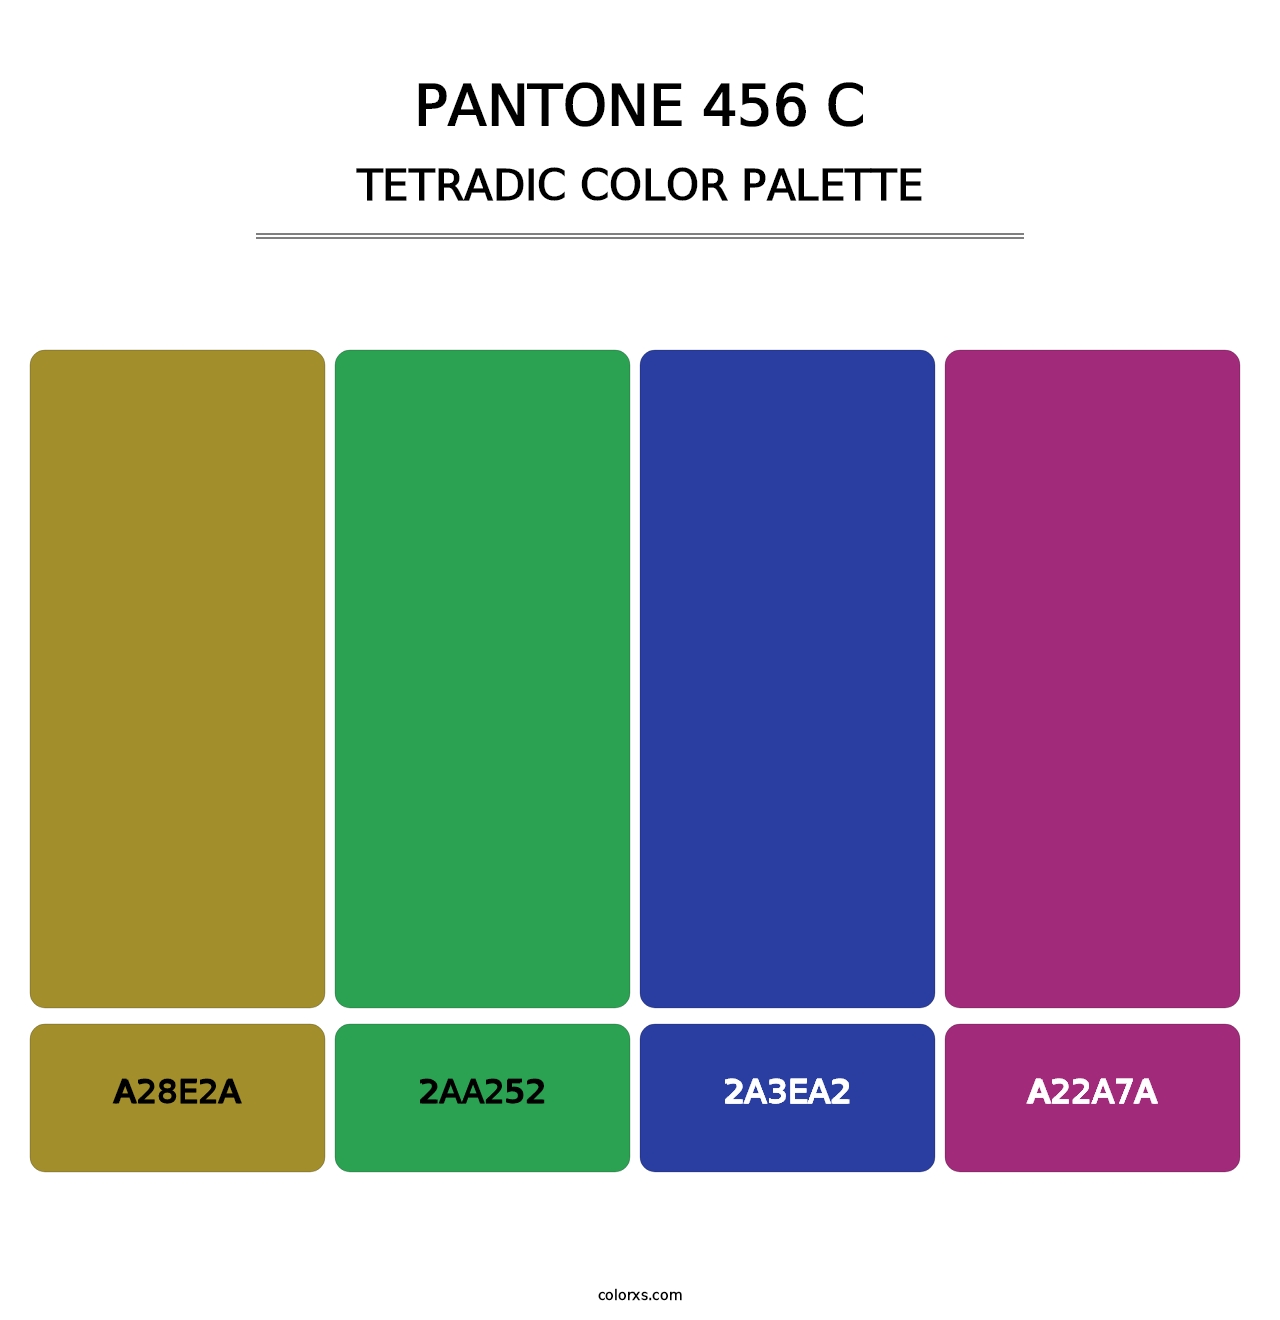 PANTONE 456 C - Tetradic Color Palette